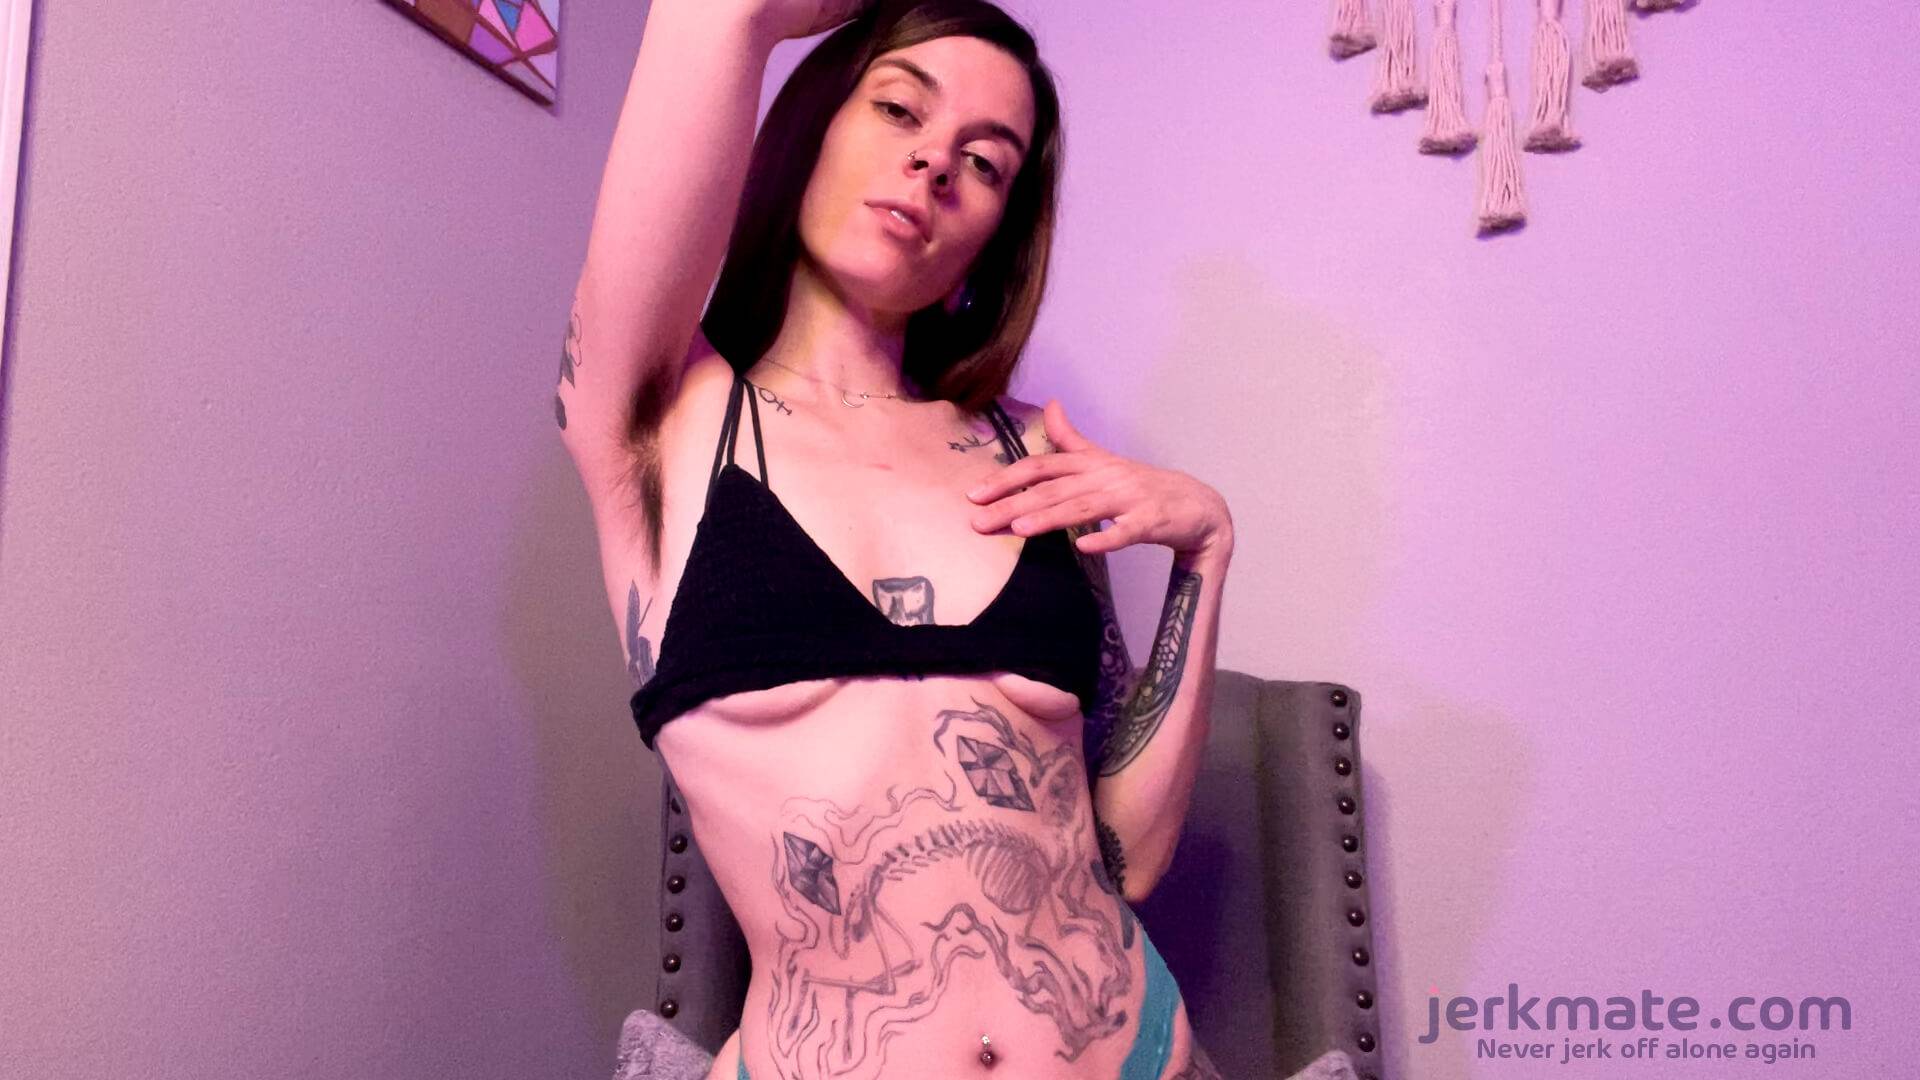 Skinny camgirl valkyree_jainex shows off her hairy armpits